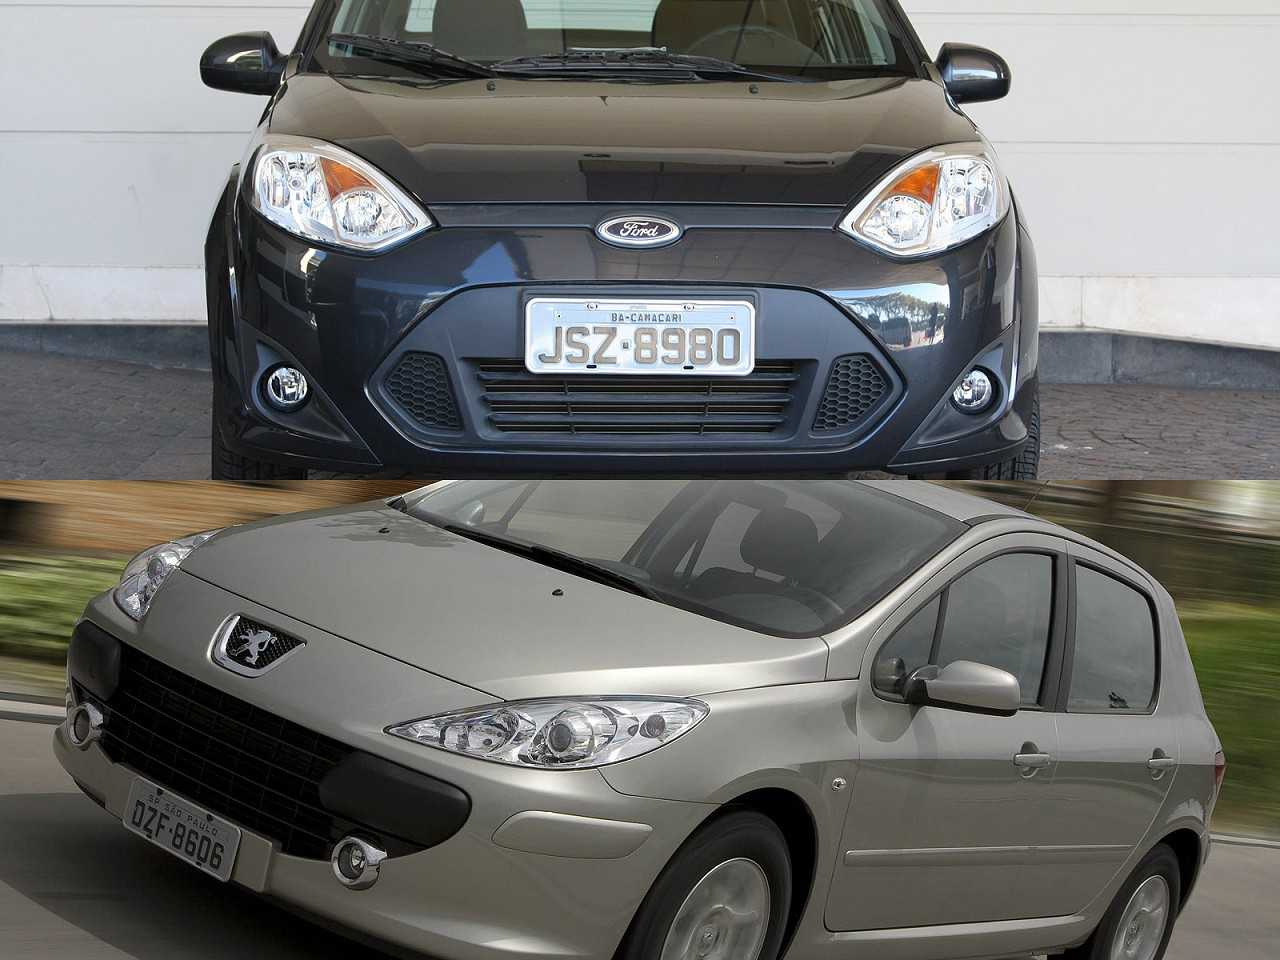 Ford Fiesta Sedan 2011 ou um Peugeot 307 2008, ambos na faixa de R$ 15.000?